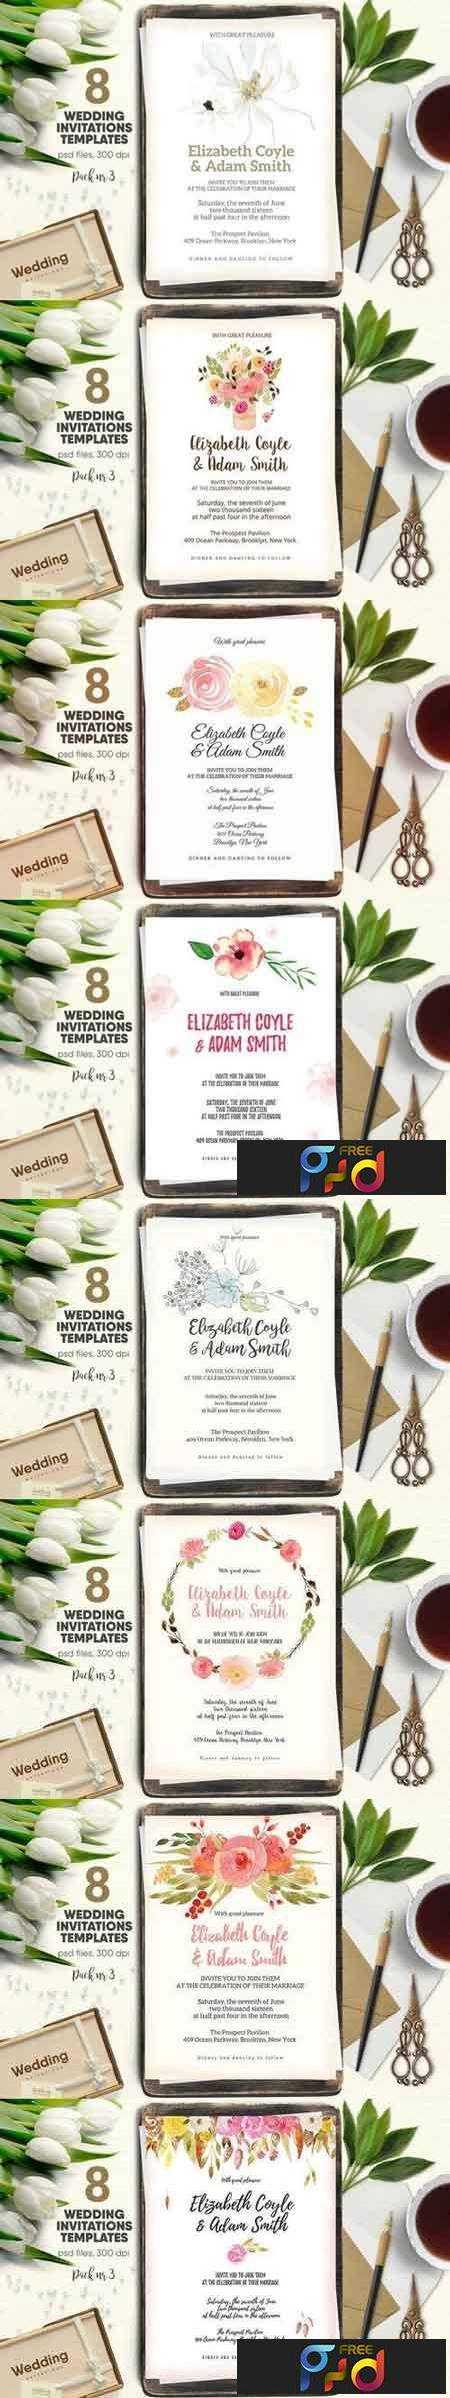 8 Wedding Invitations Pack 3